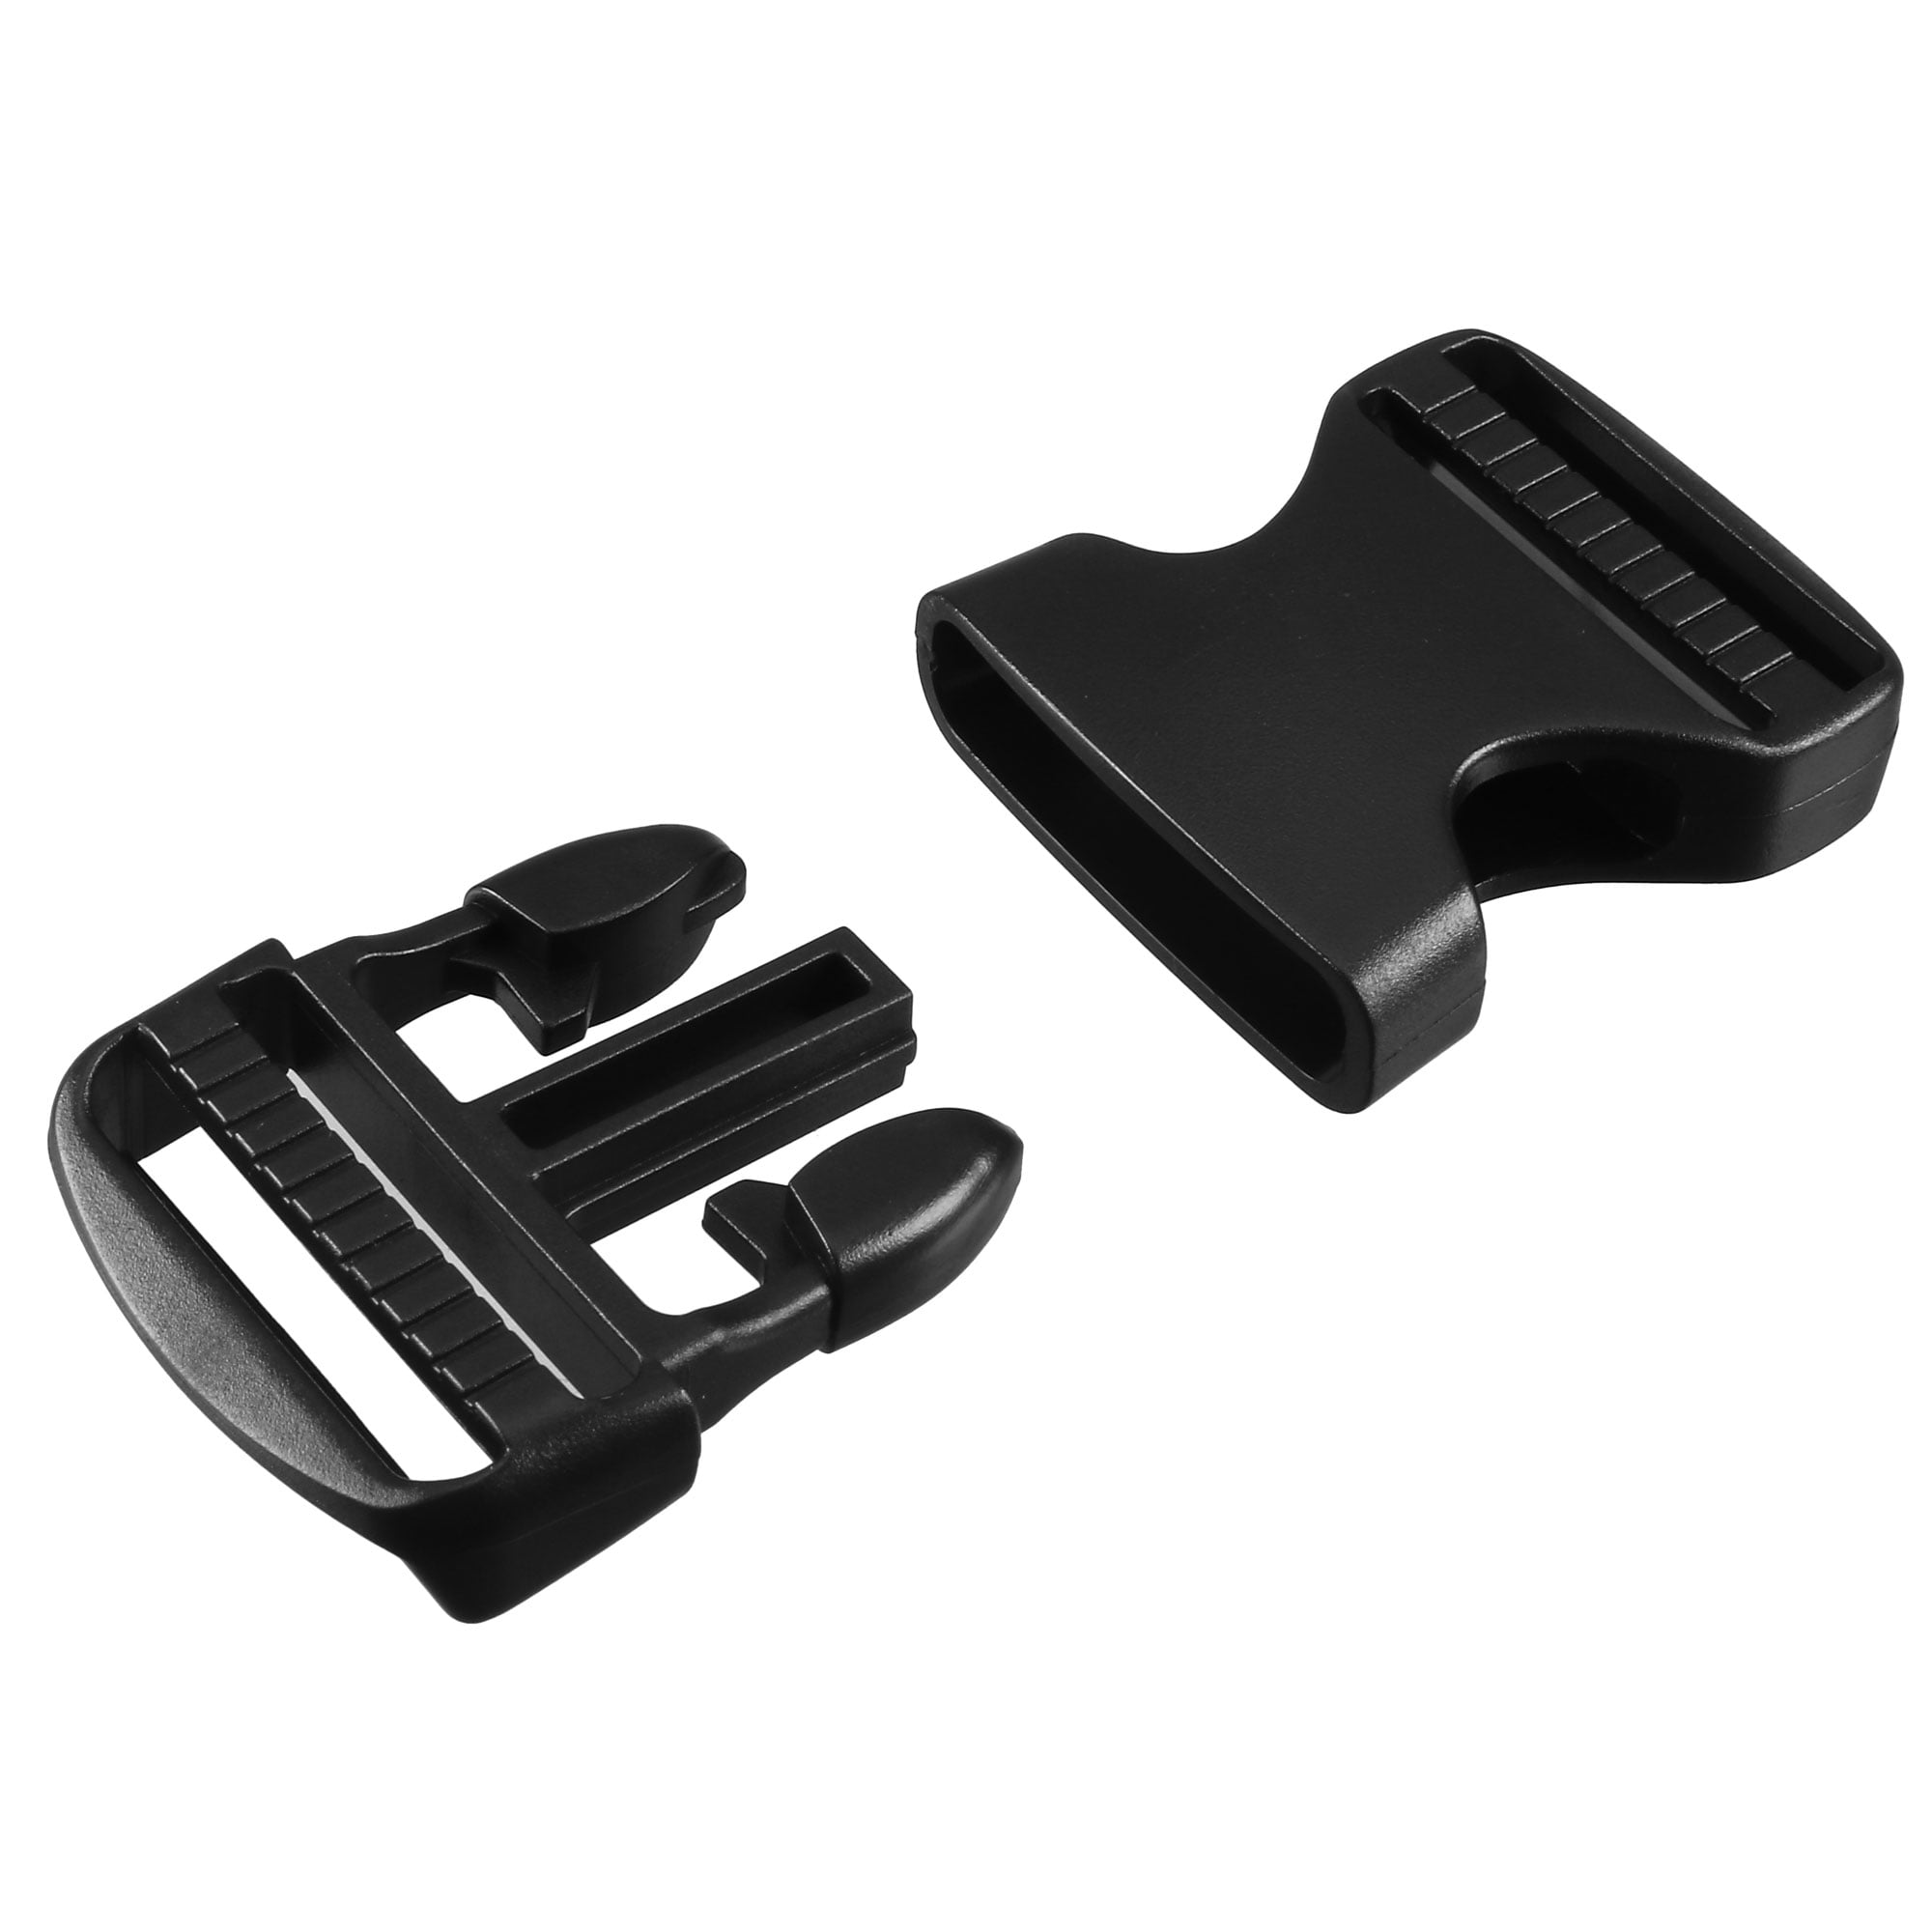 Replacement straps BLACK 1/2”wide brandnew